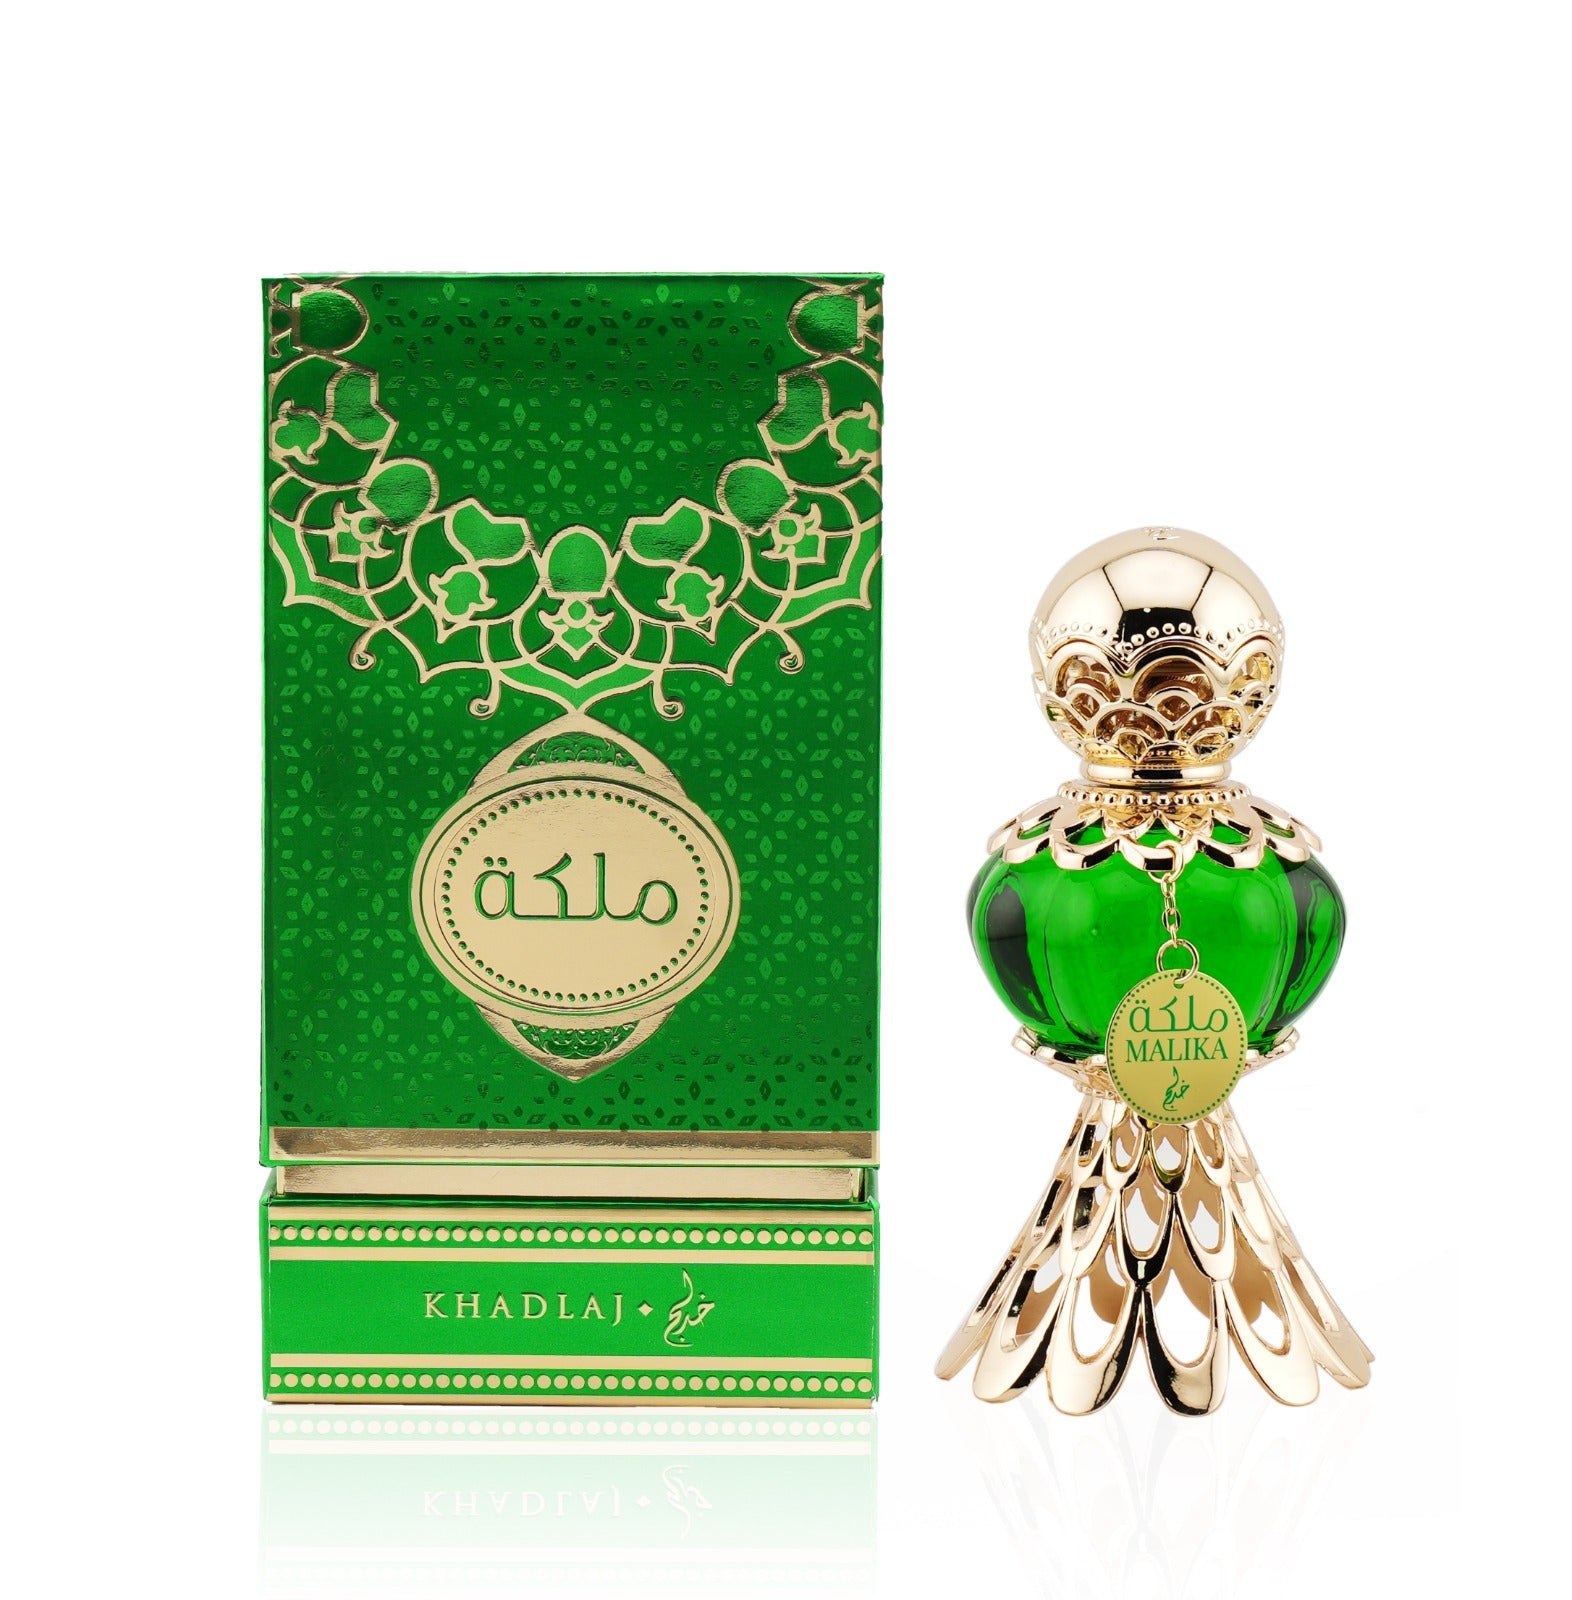 Khadlaj Malika Green oil perfume for women 20 ml